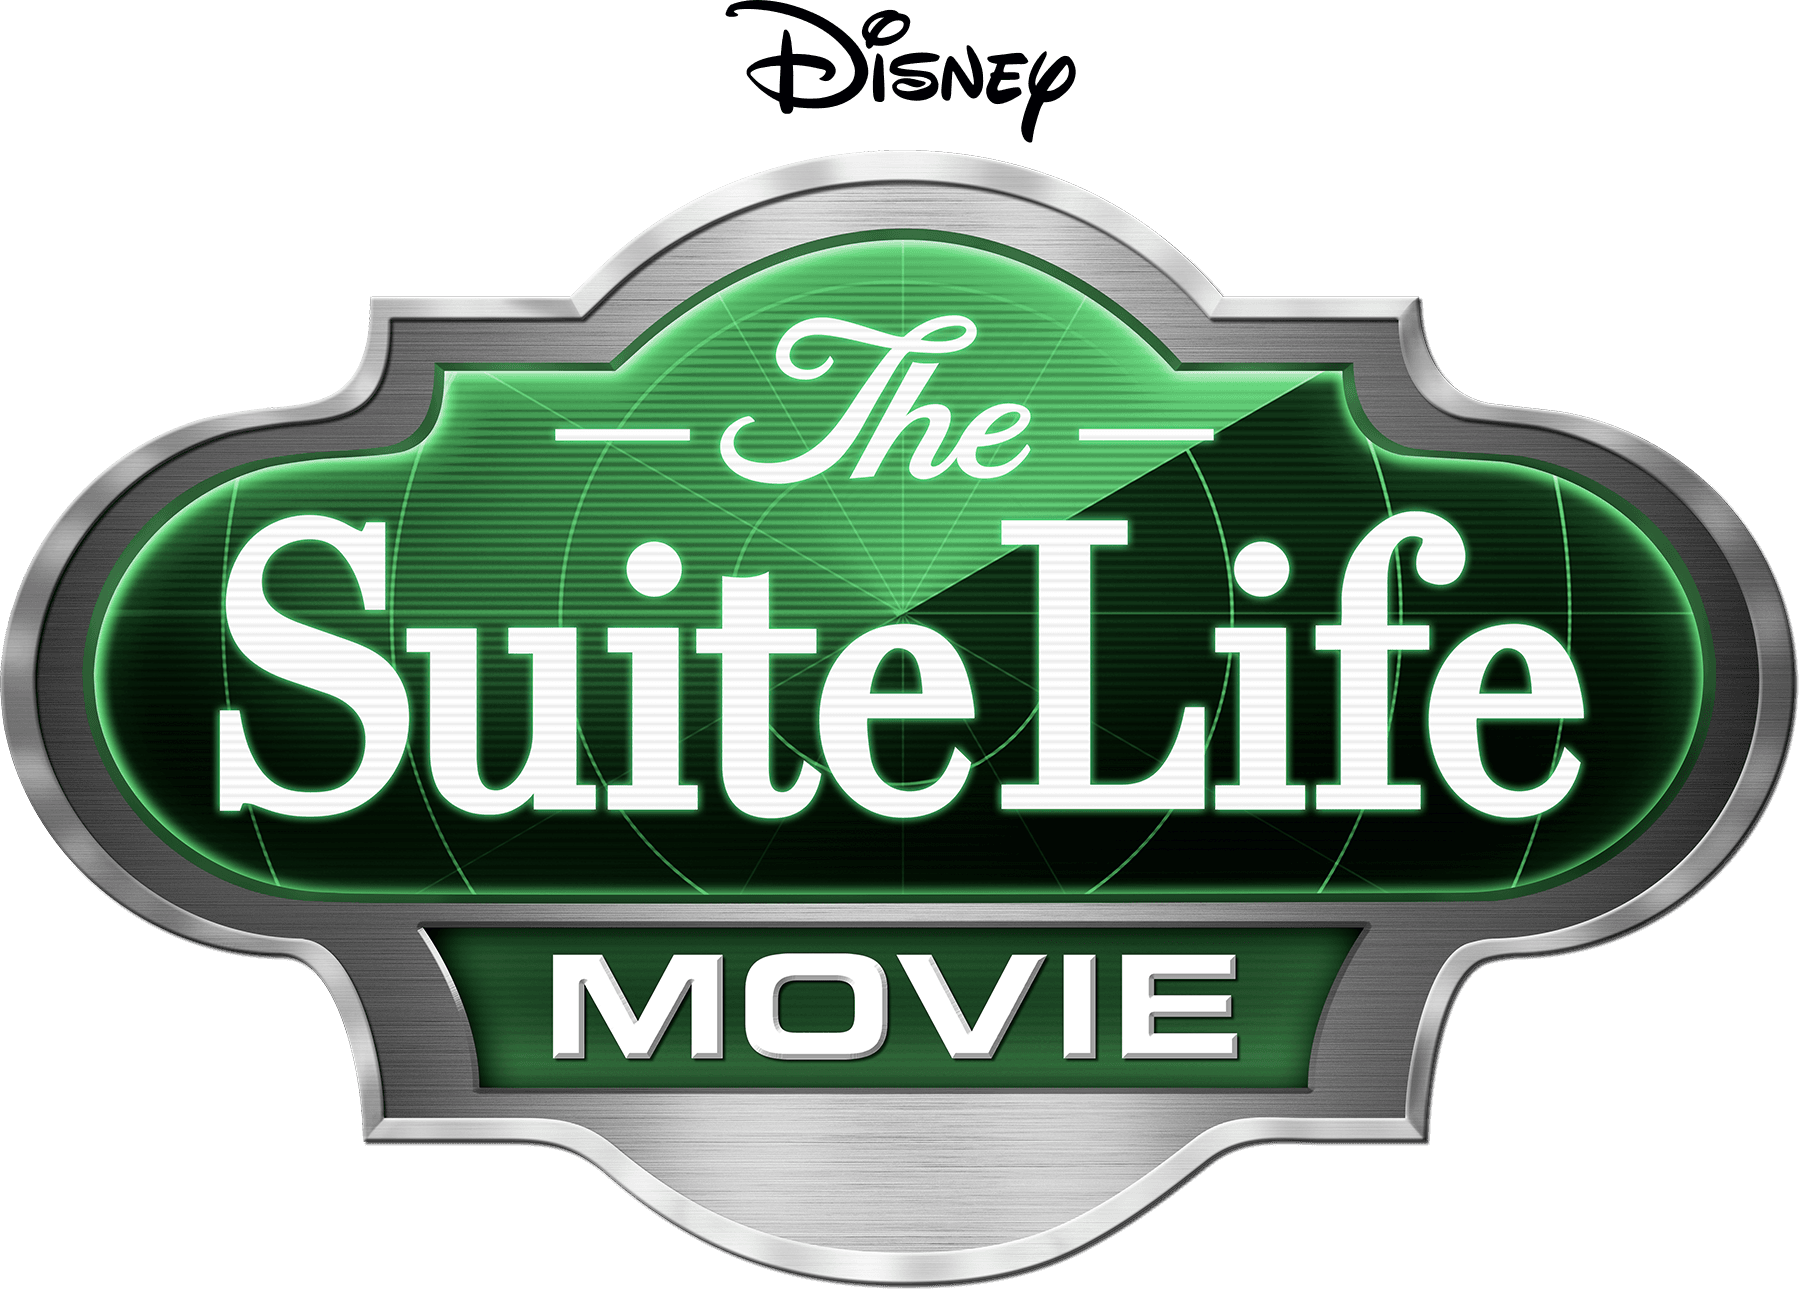 The Suite Life Movie logo